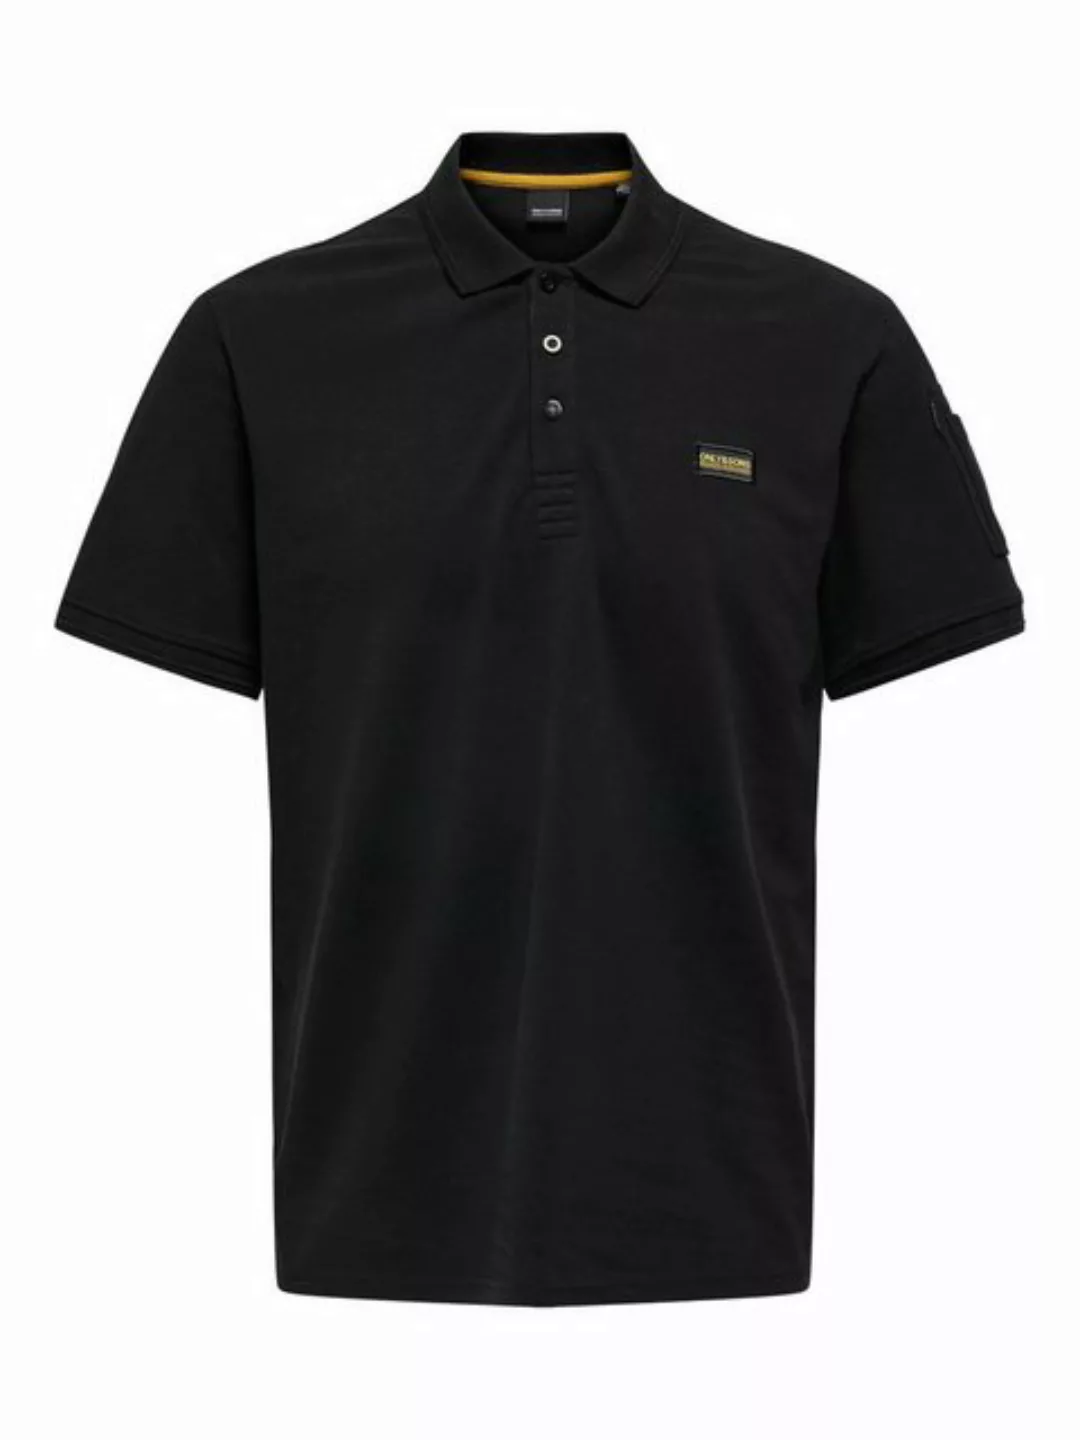 ONLY & SONS Poloshirt Poloshirt Kurzarm Polokragen Baumwolle Hemd 7636 in S günstig online kaufen